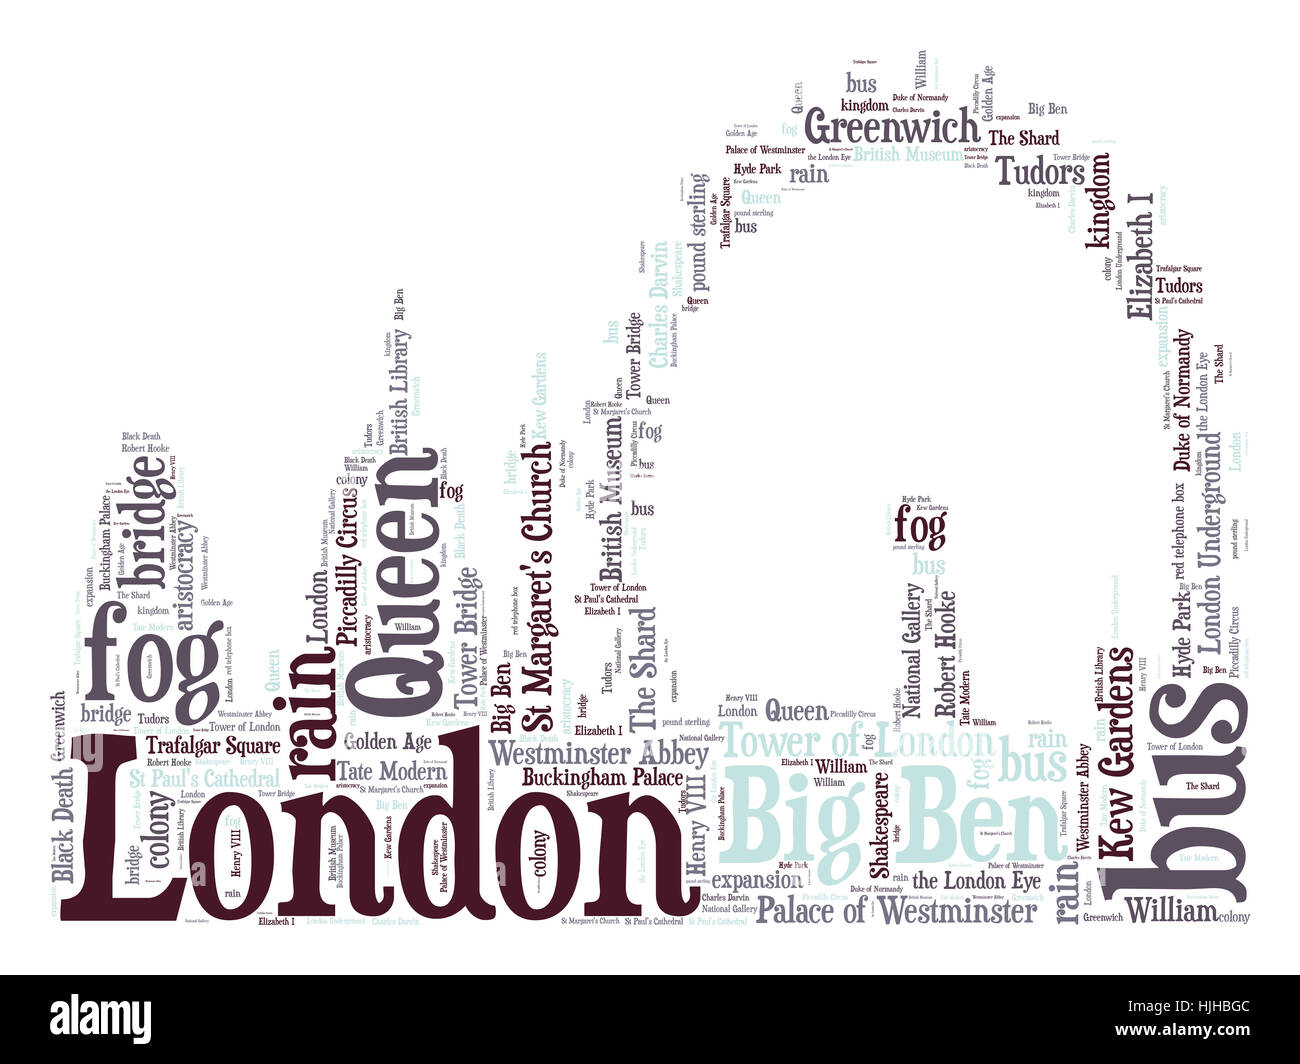 tourism, london, england, bridge, fog, colony, london, queen, rain, william, Stock Photo